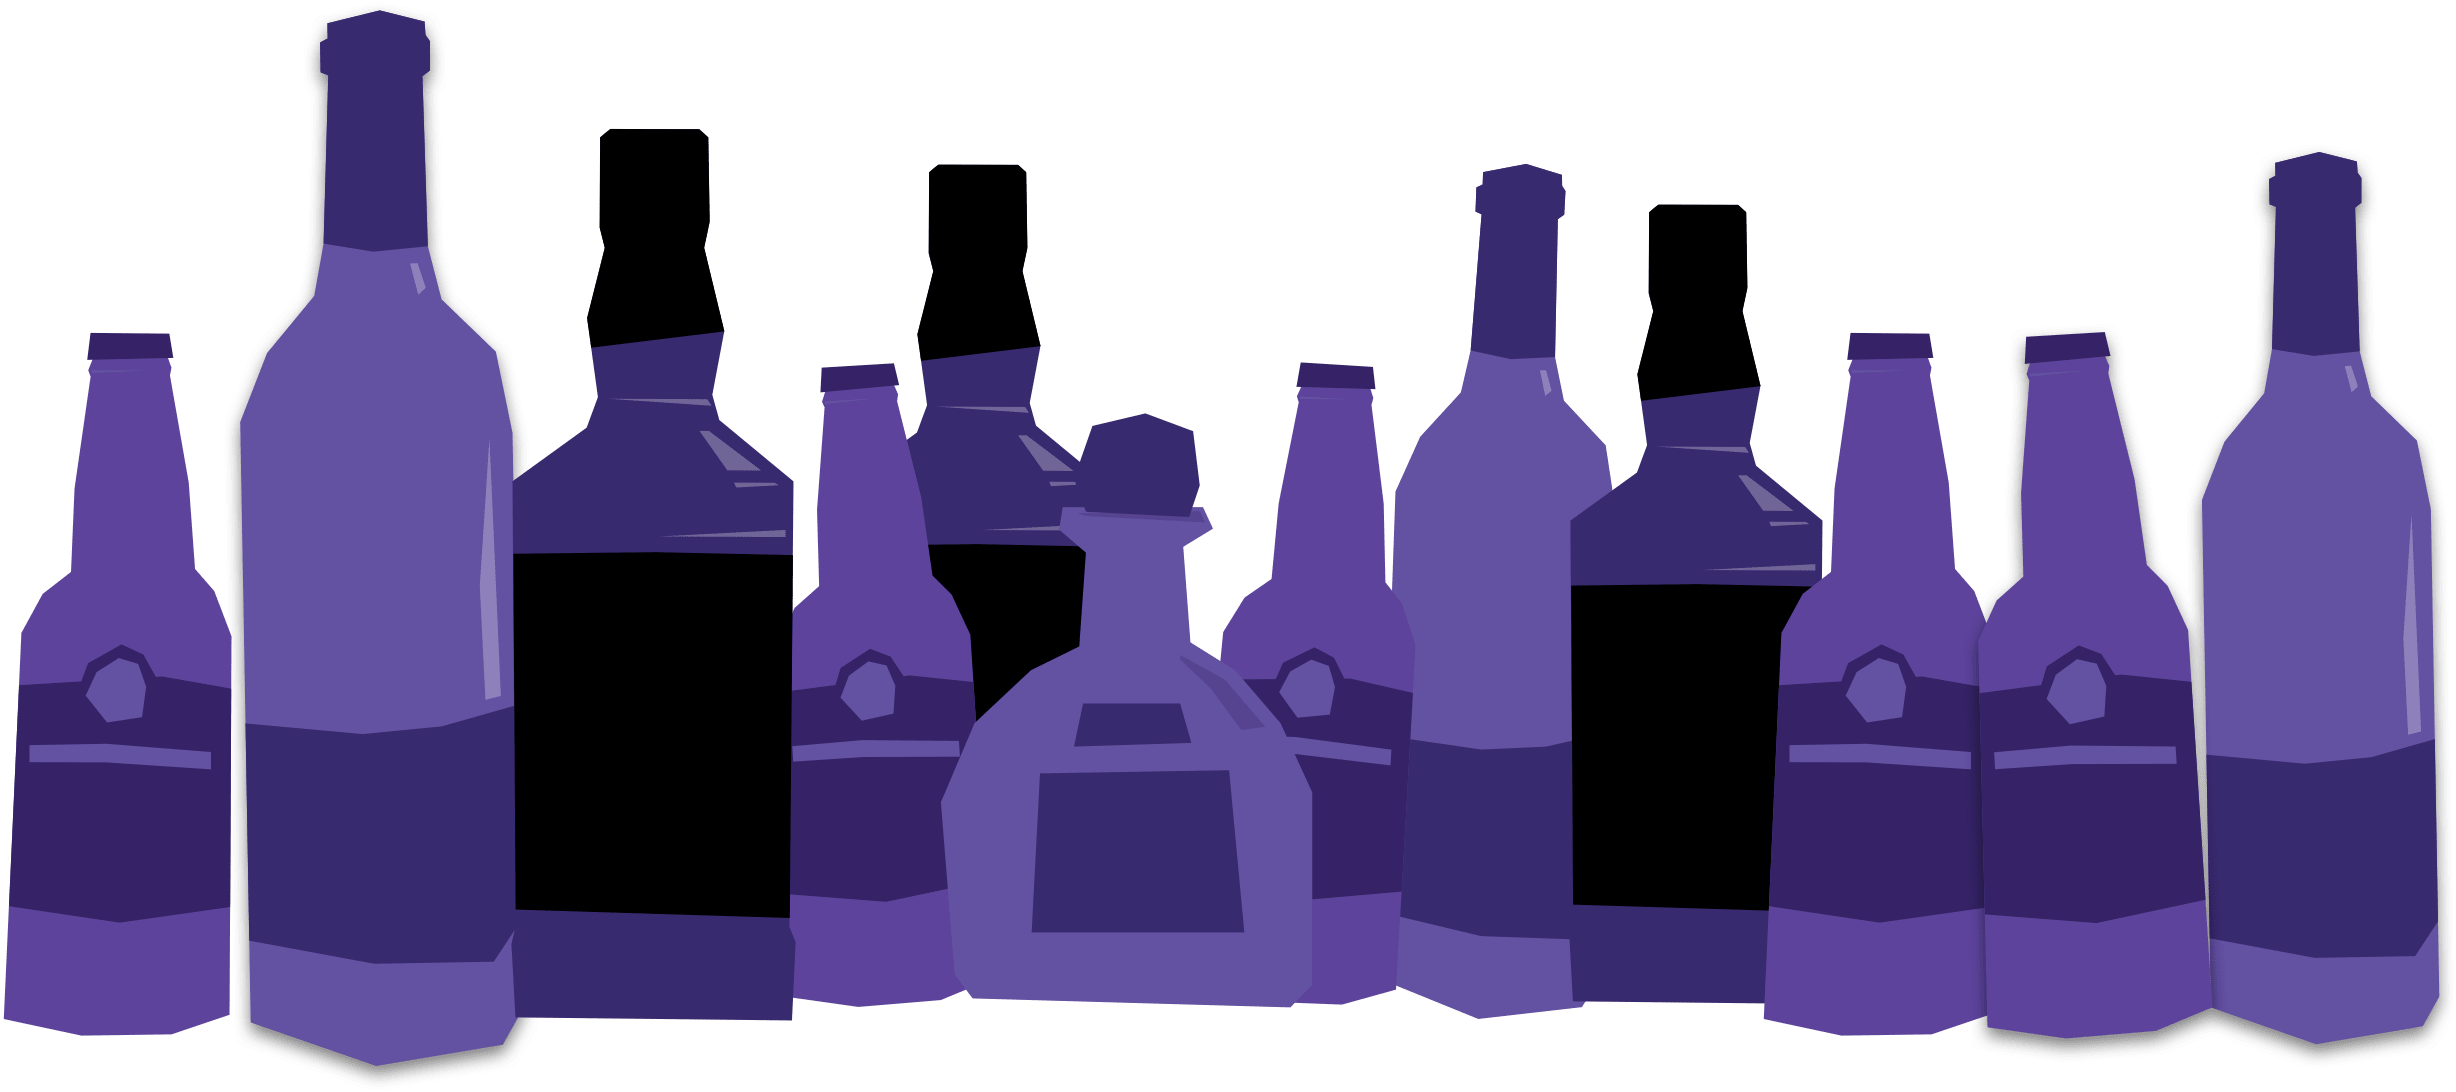 Drawings of bottles of beer, wine and spirits